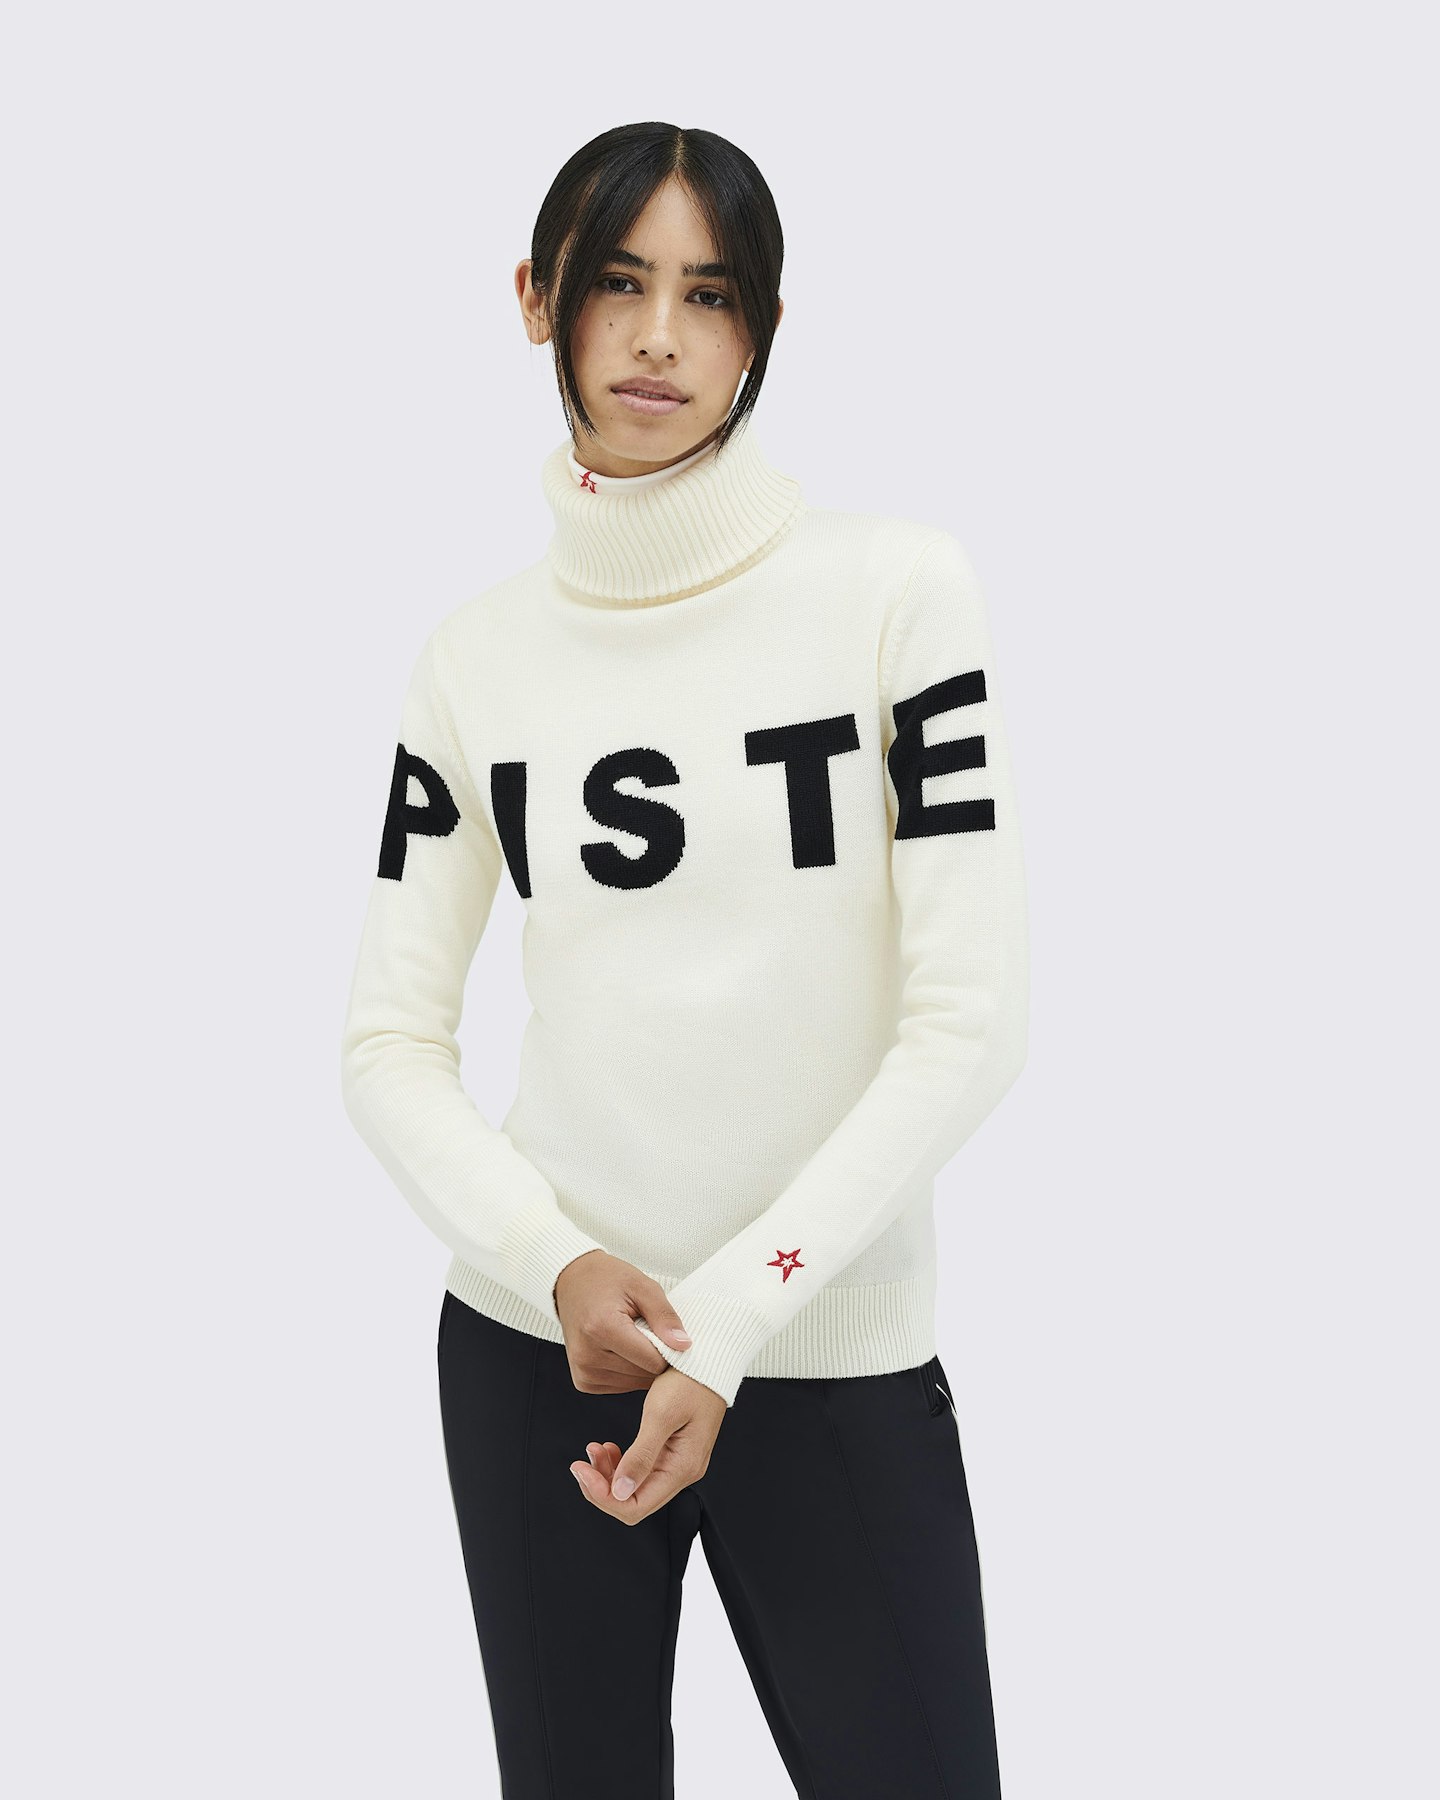 Piste Merino Wool Sweater 1